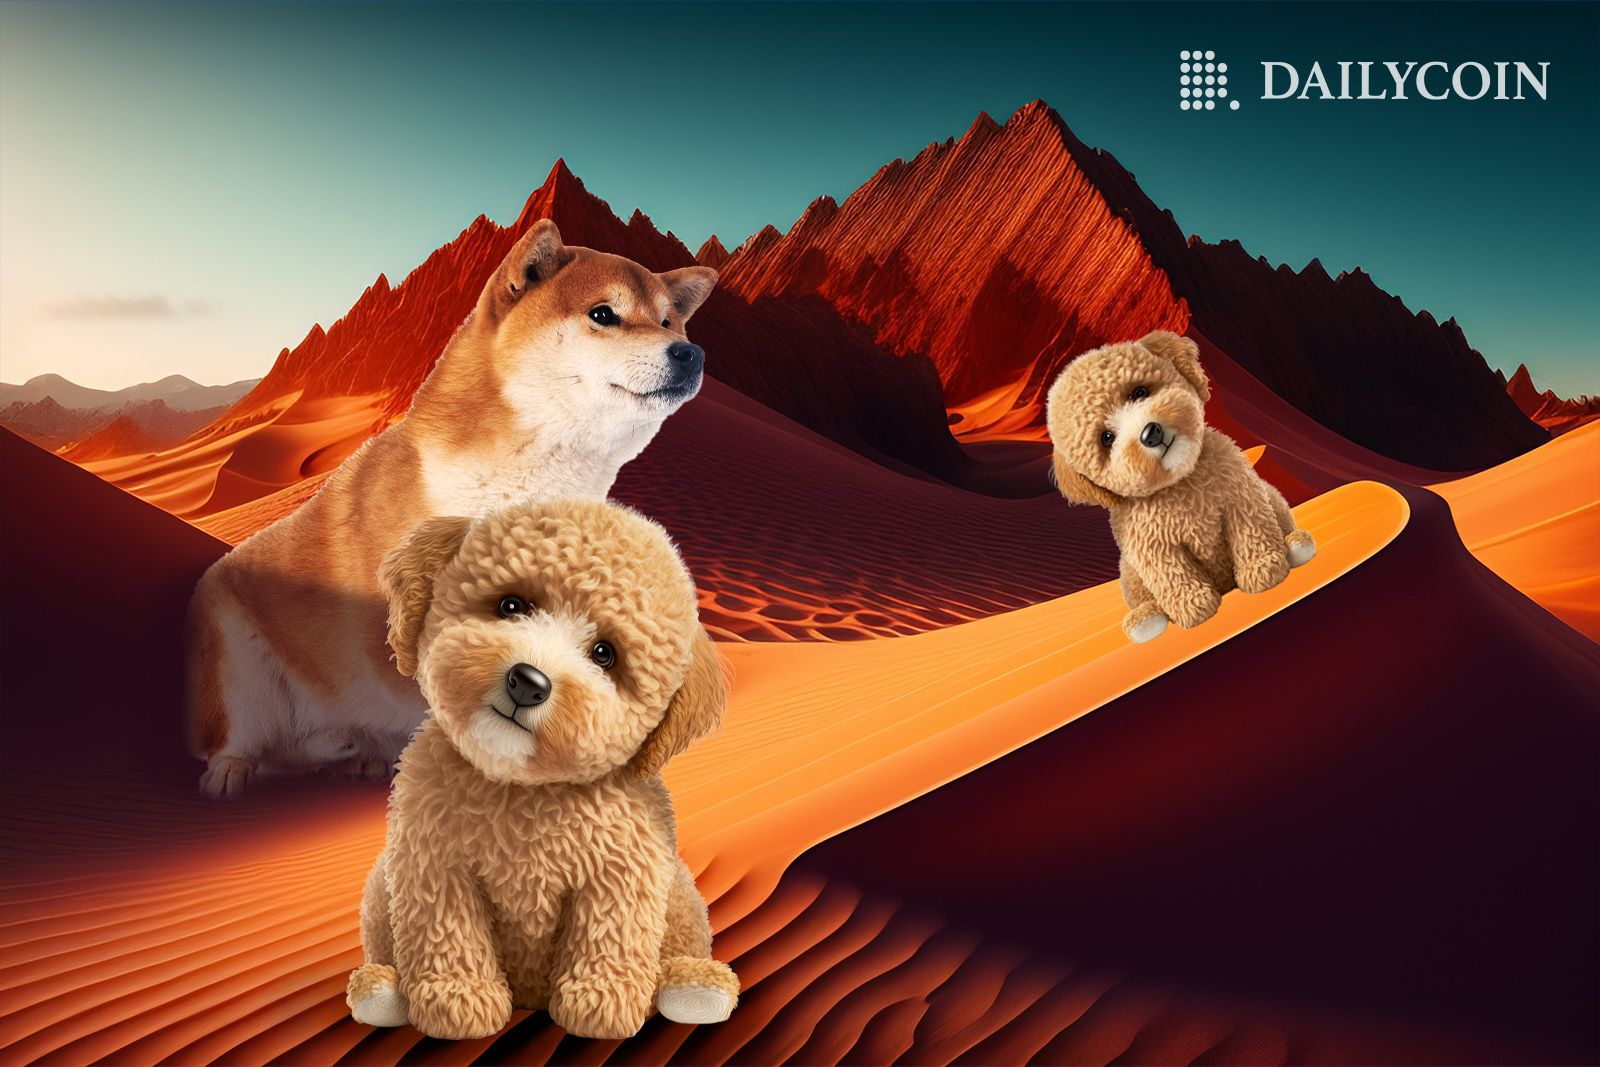 Big Shiba Inu dog is staring at two fluffy puppies in Shibarium's orange sandhill setting.